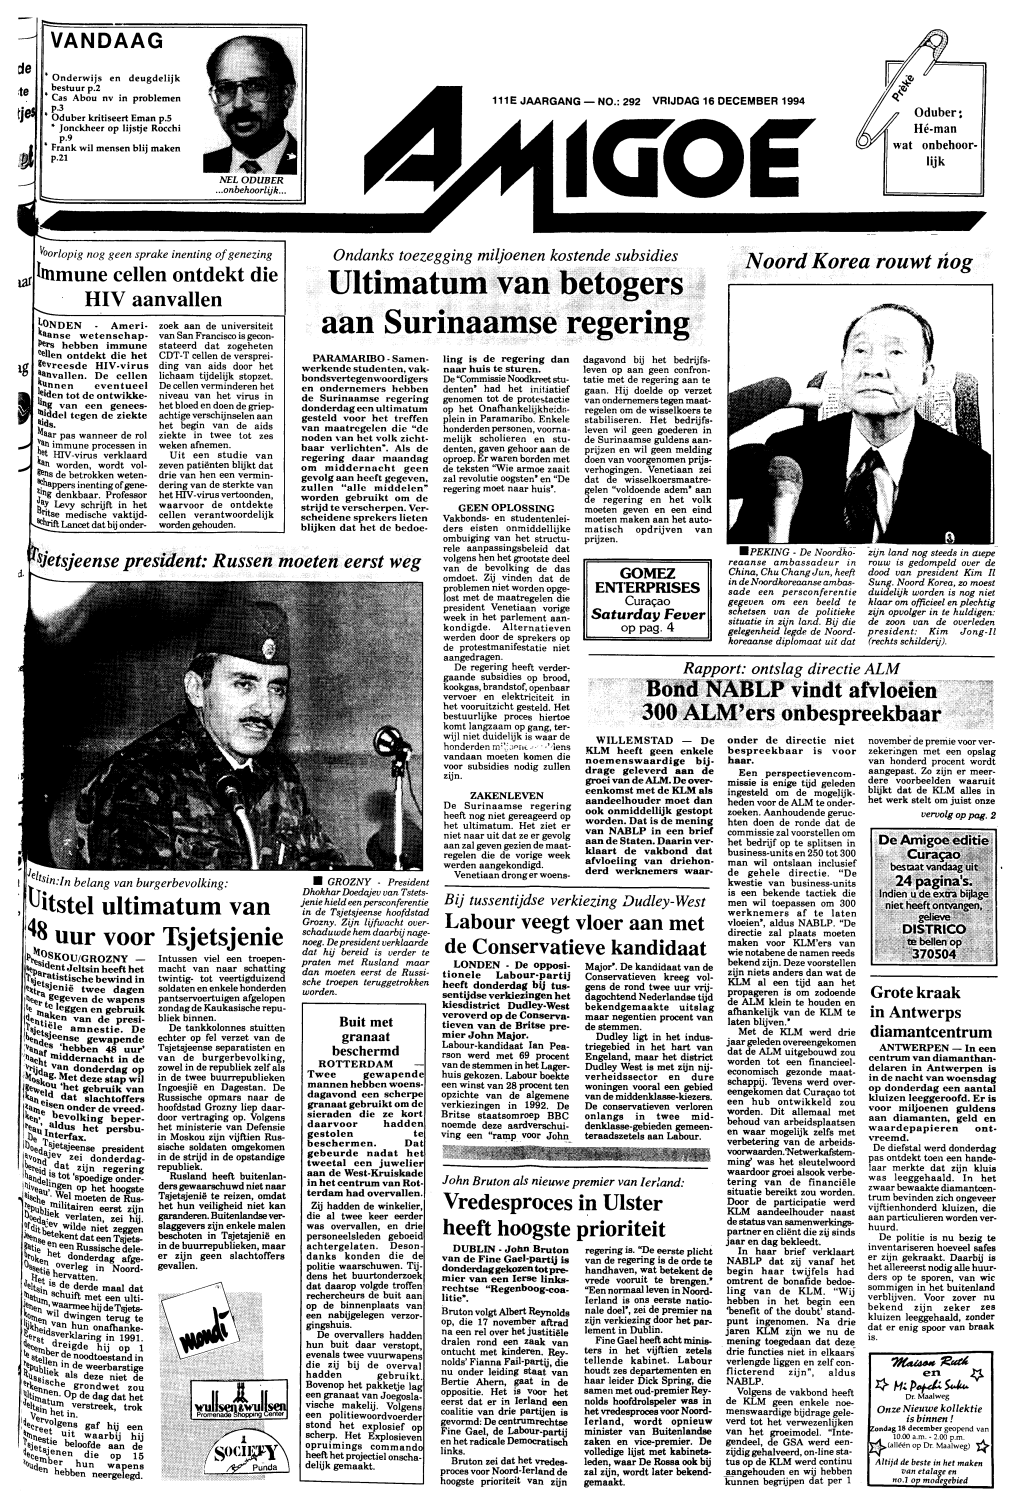 Uitstel Ultimatum Van Grozny